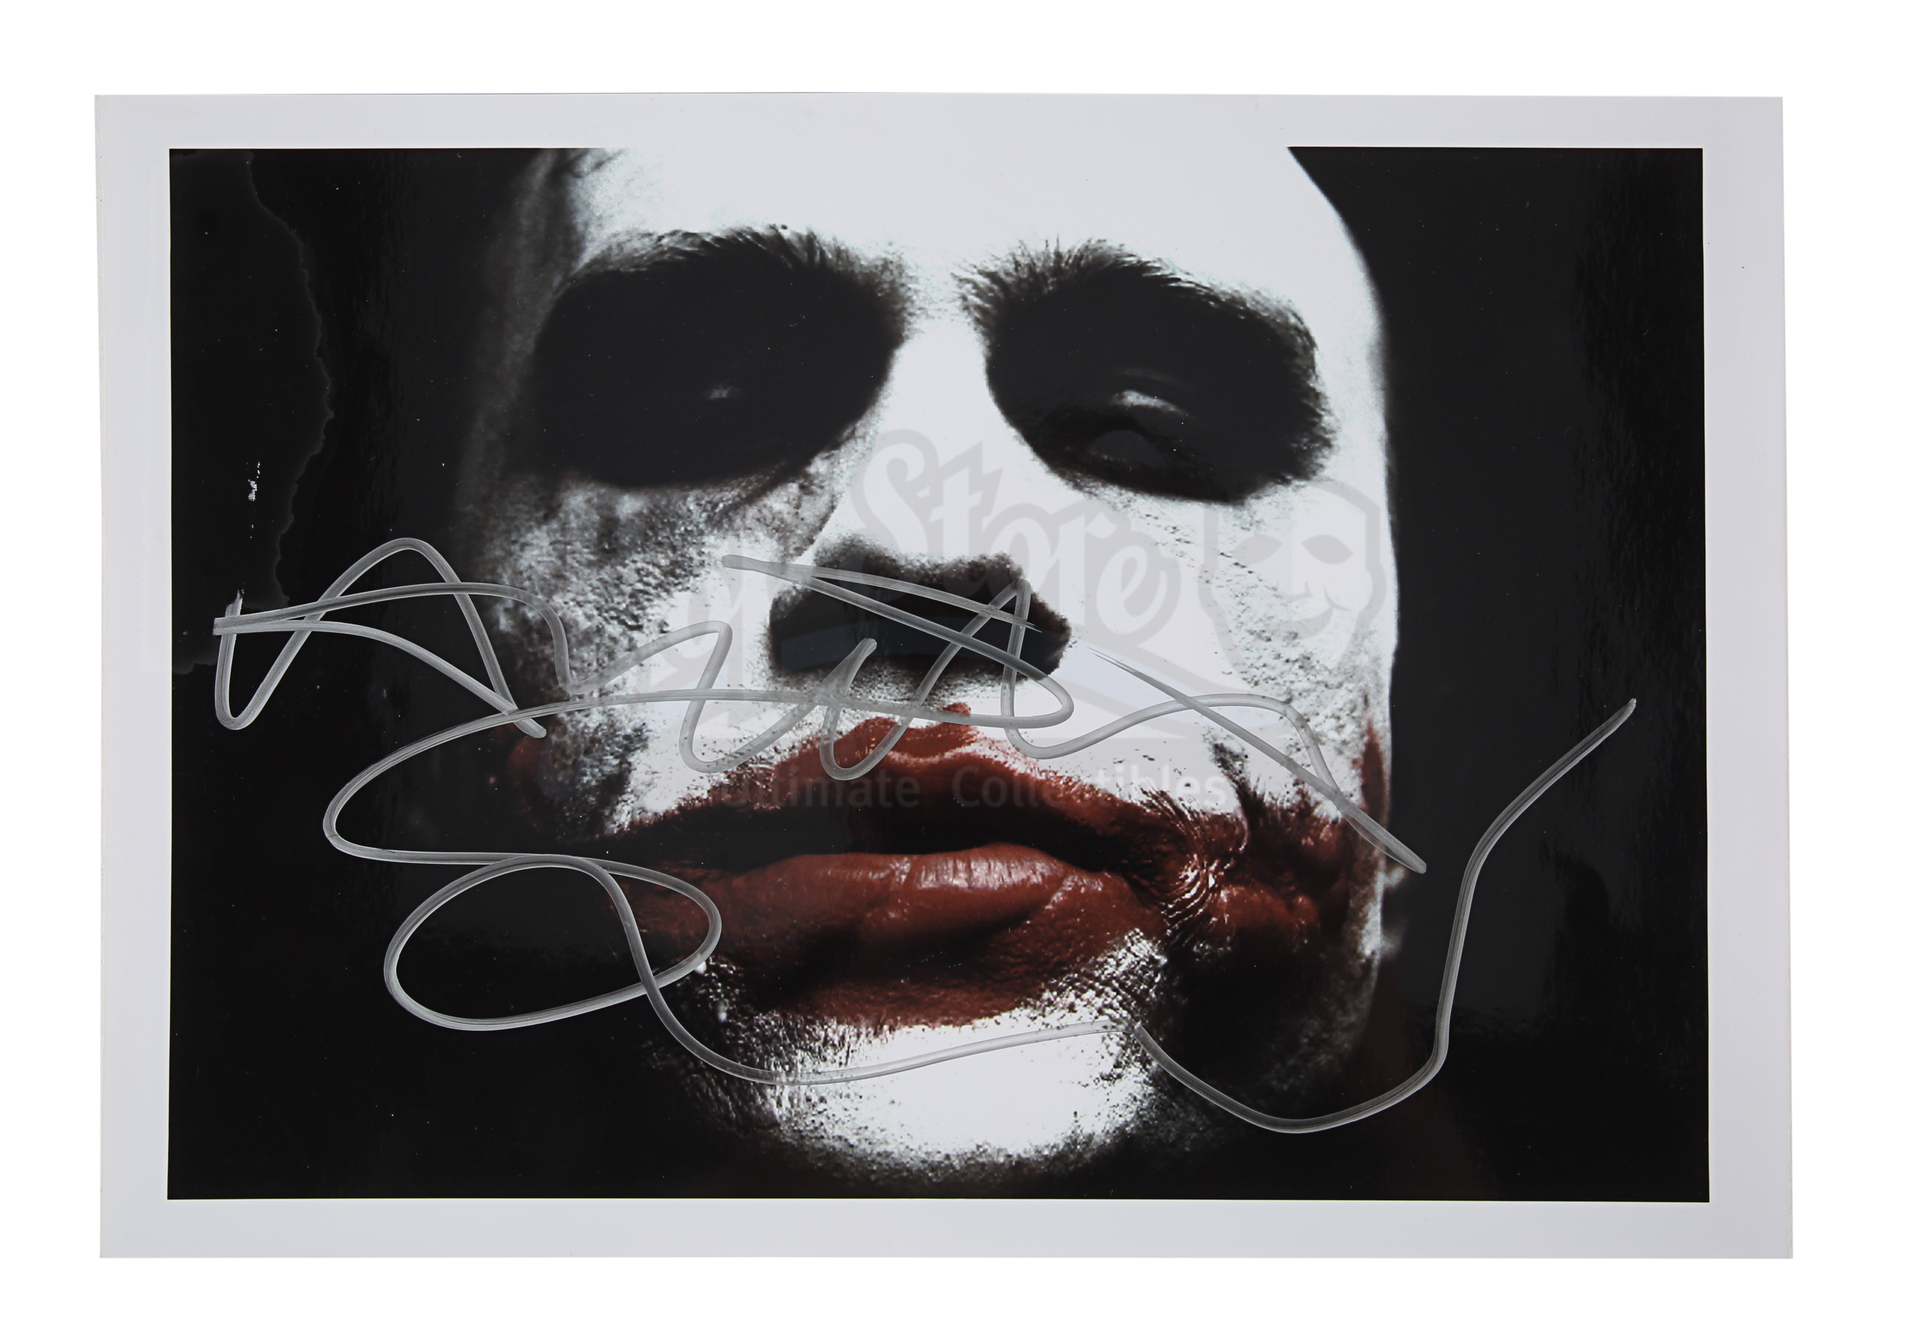 THE DARK KNIGHT (2008) - Heath Ledger 'Joker' Autographed Photo